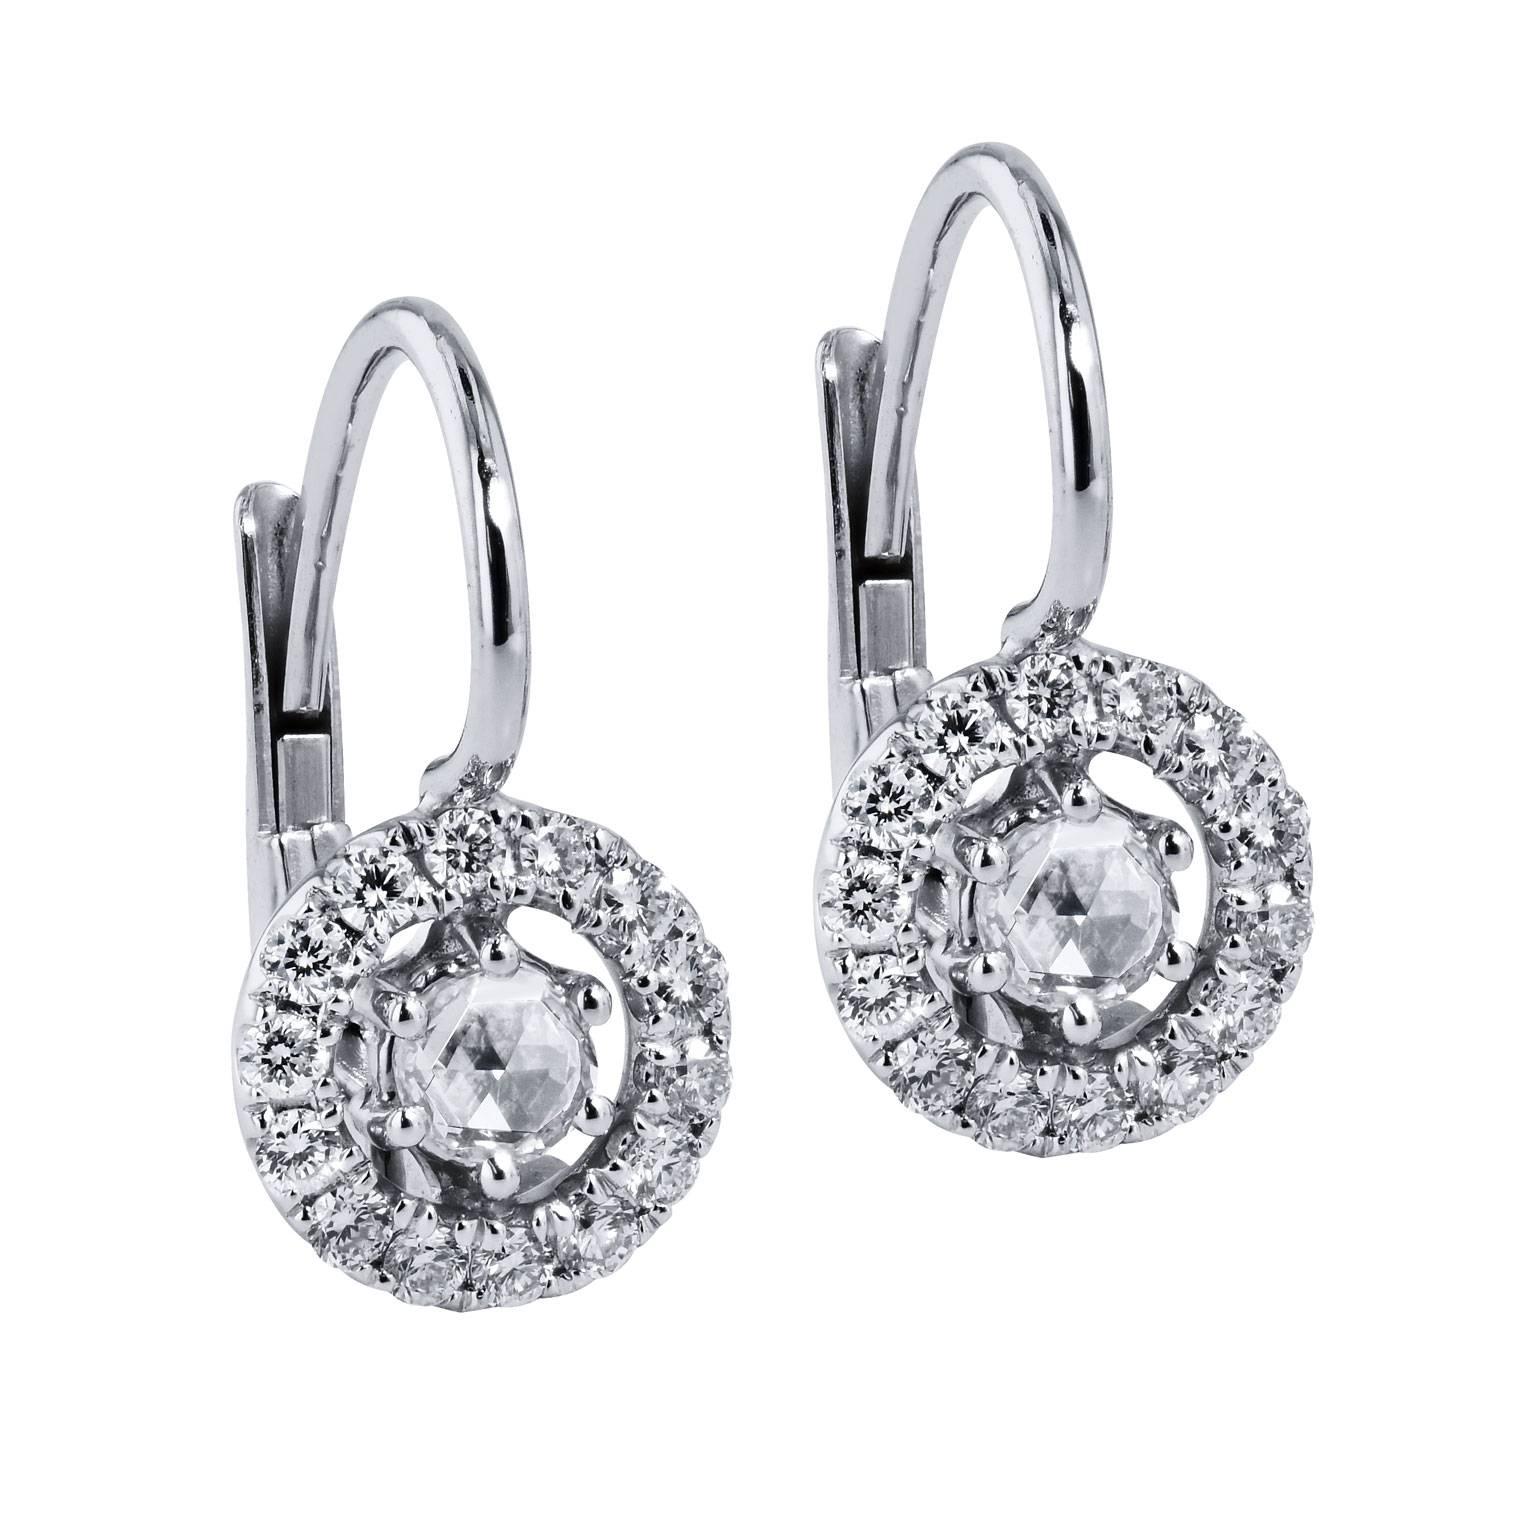 Round Cut 0.40 Carat Diamond Lever-Back Earrings